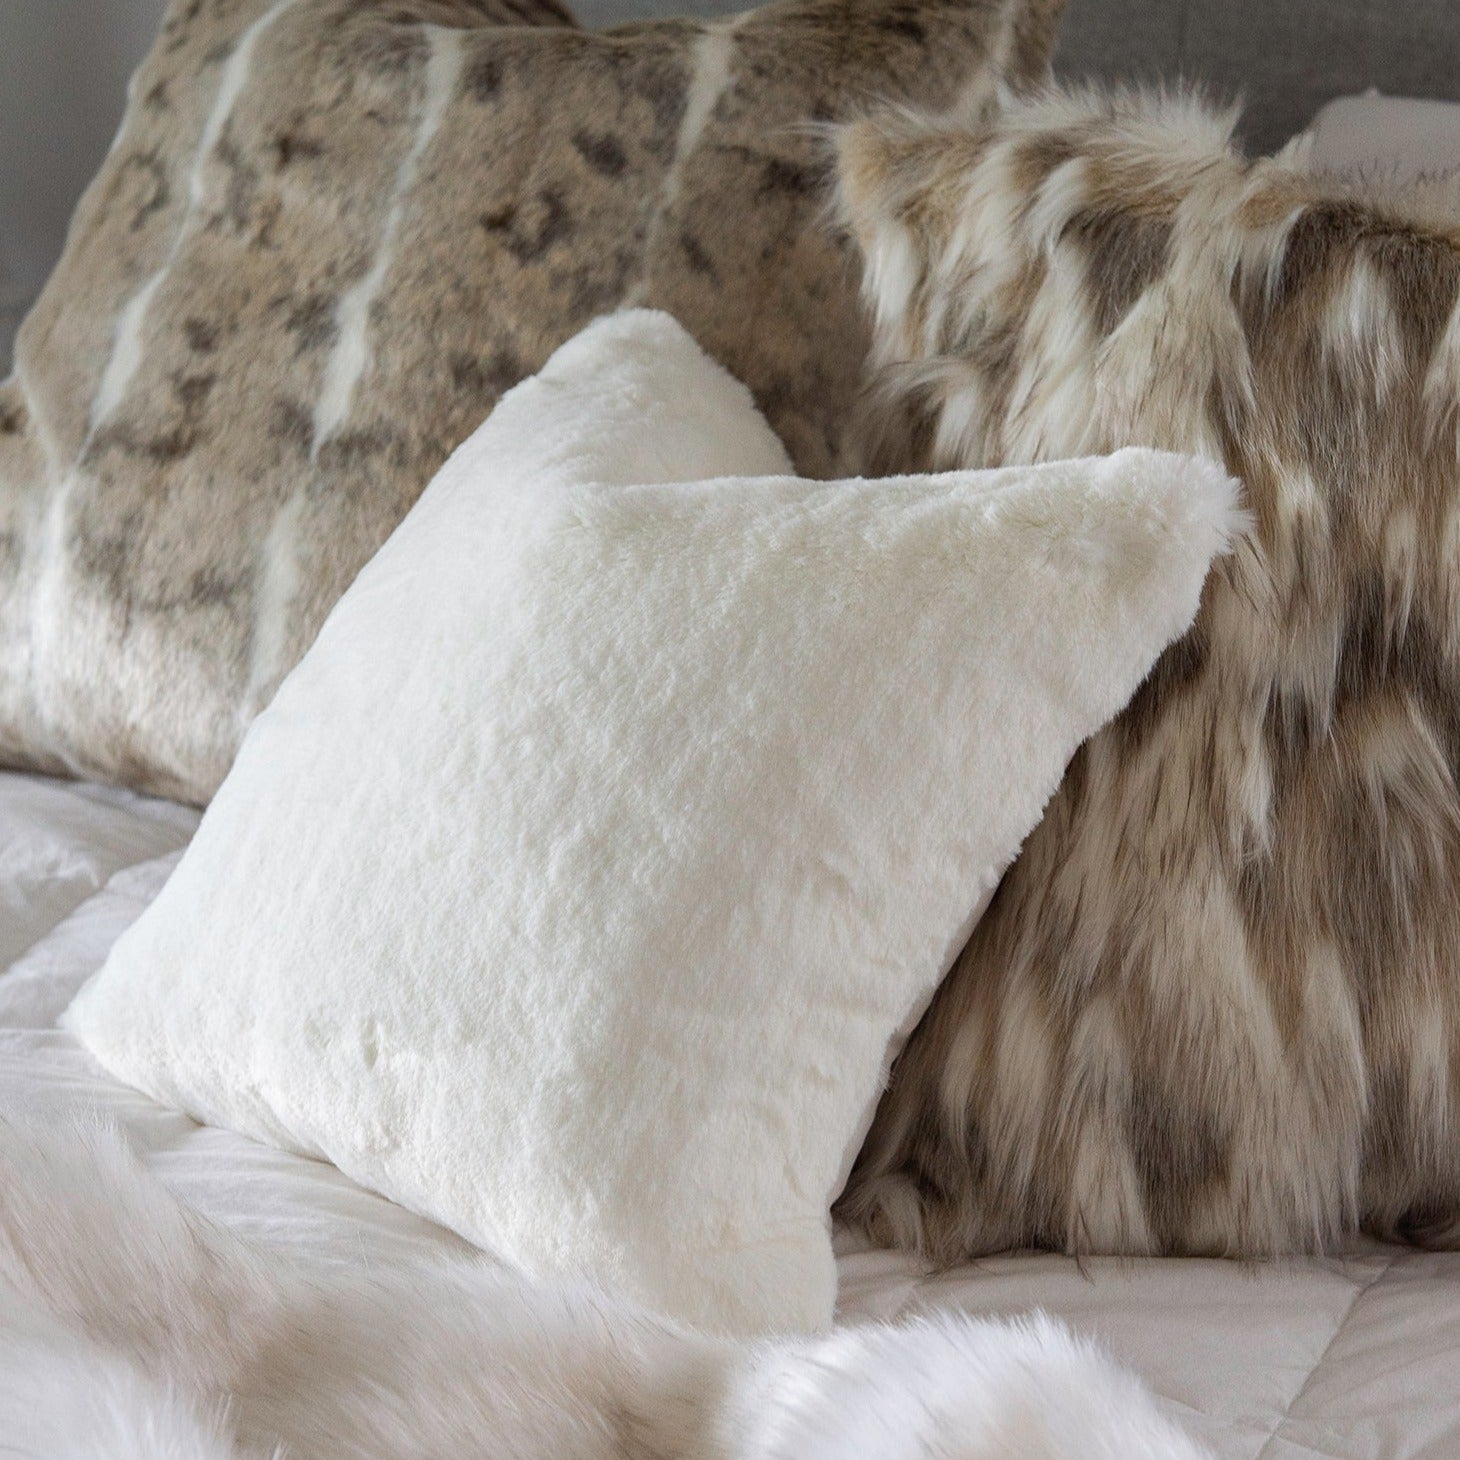 Luxury imitation fur cushion ,  Polar Bear by Heirloom for New Zealand interiors